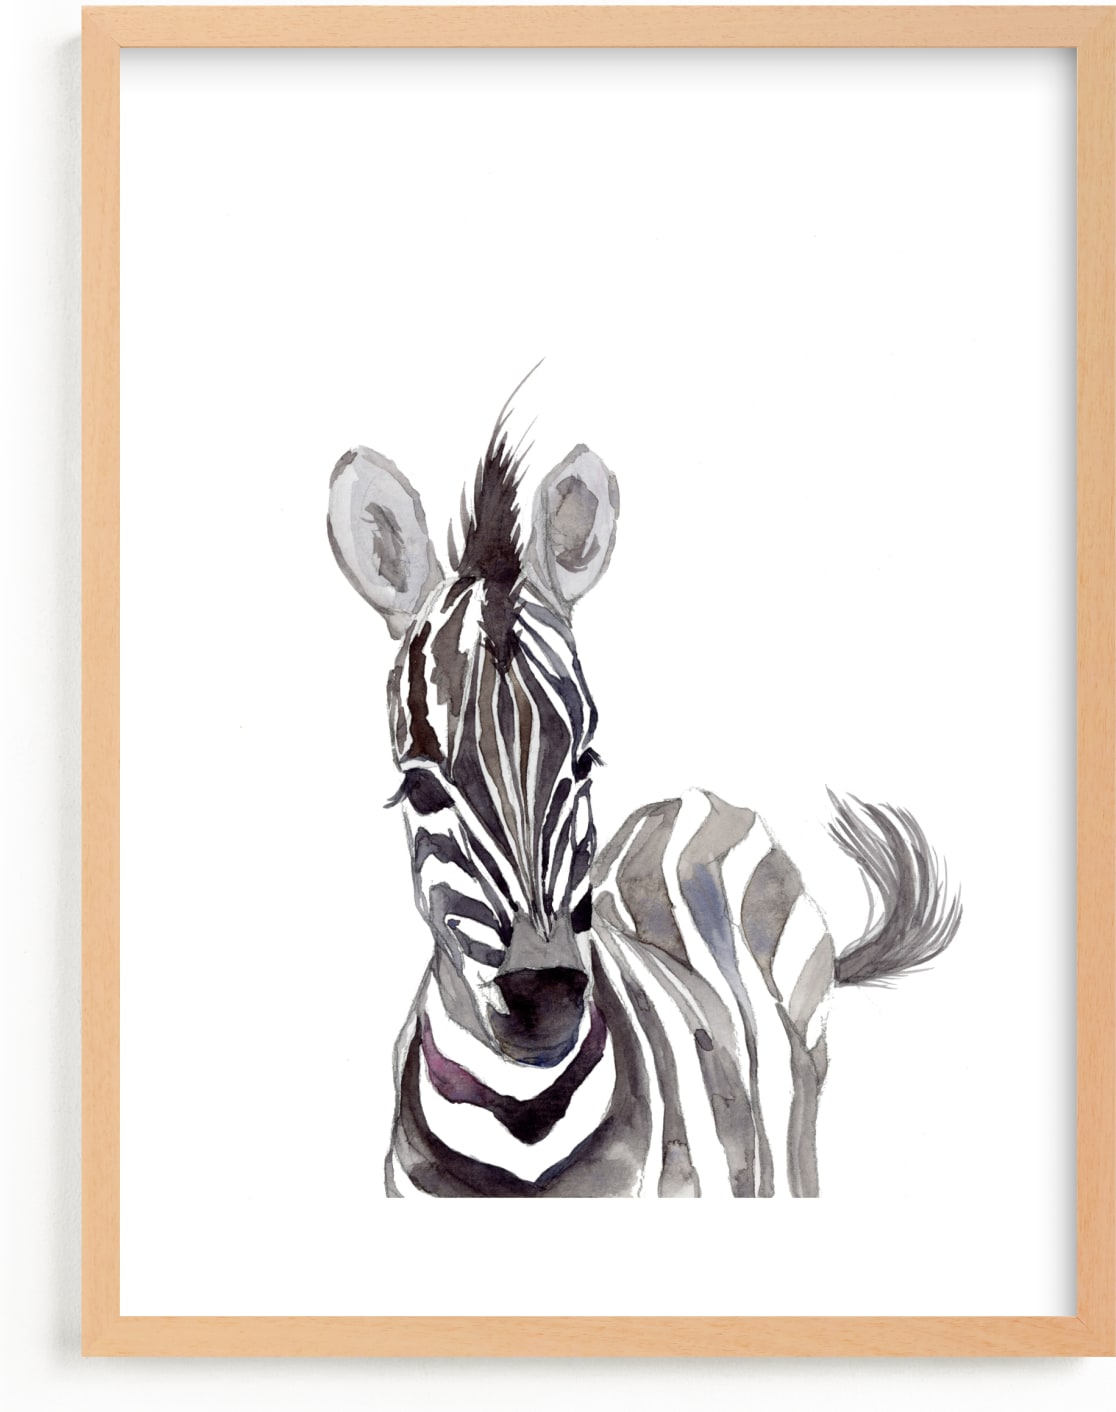 This is a white nursery wall art by Jieun K Rasband called Baby Animal Friends: Zebra.